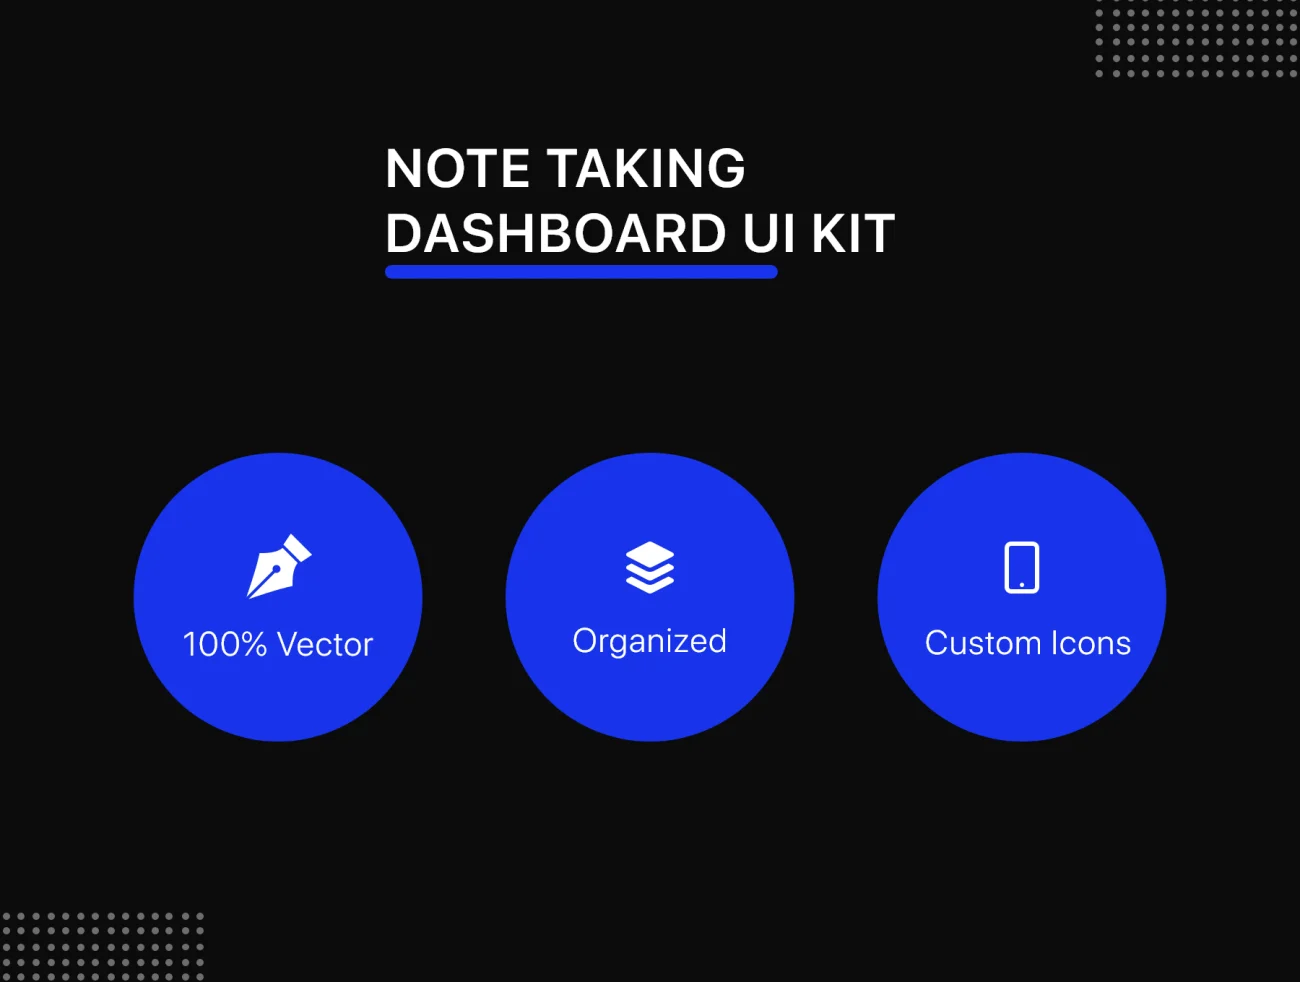 Notes do Notes Taking Dashboard UI Kit 笔记用户界面设计工具包-UI/UX、ui套件、列表、卡片式、图表、数据可视化-仪表板、表单-到位啦UI